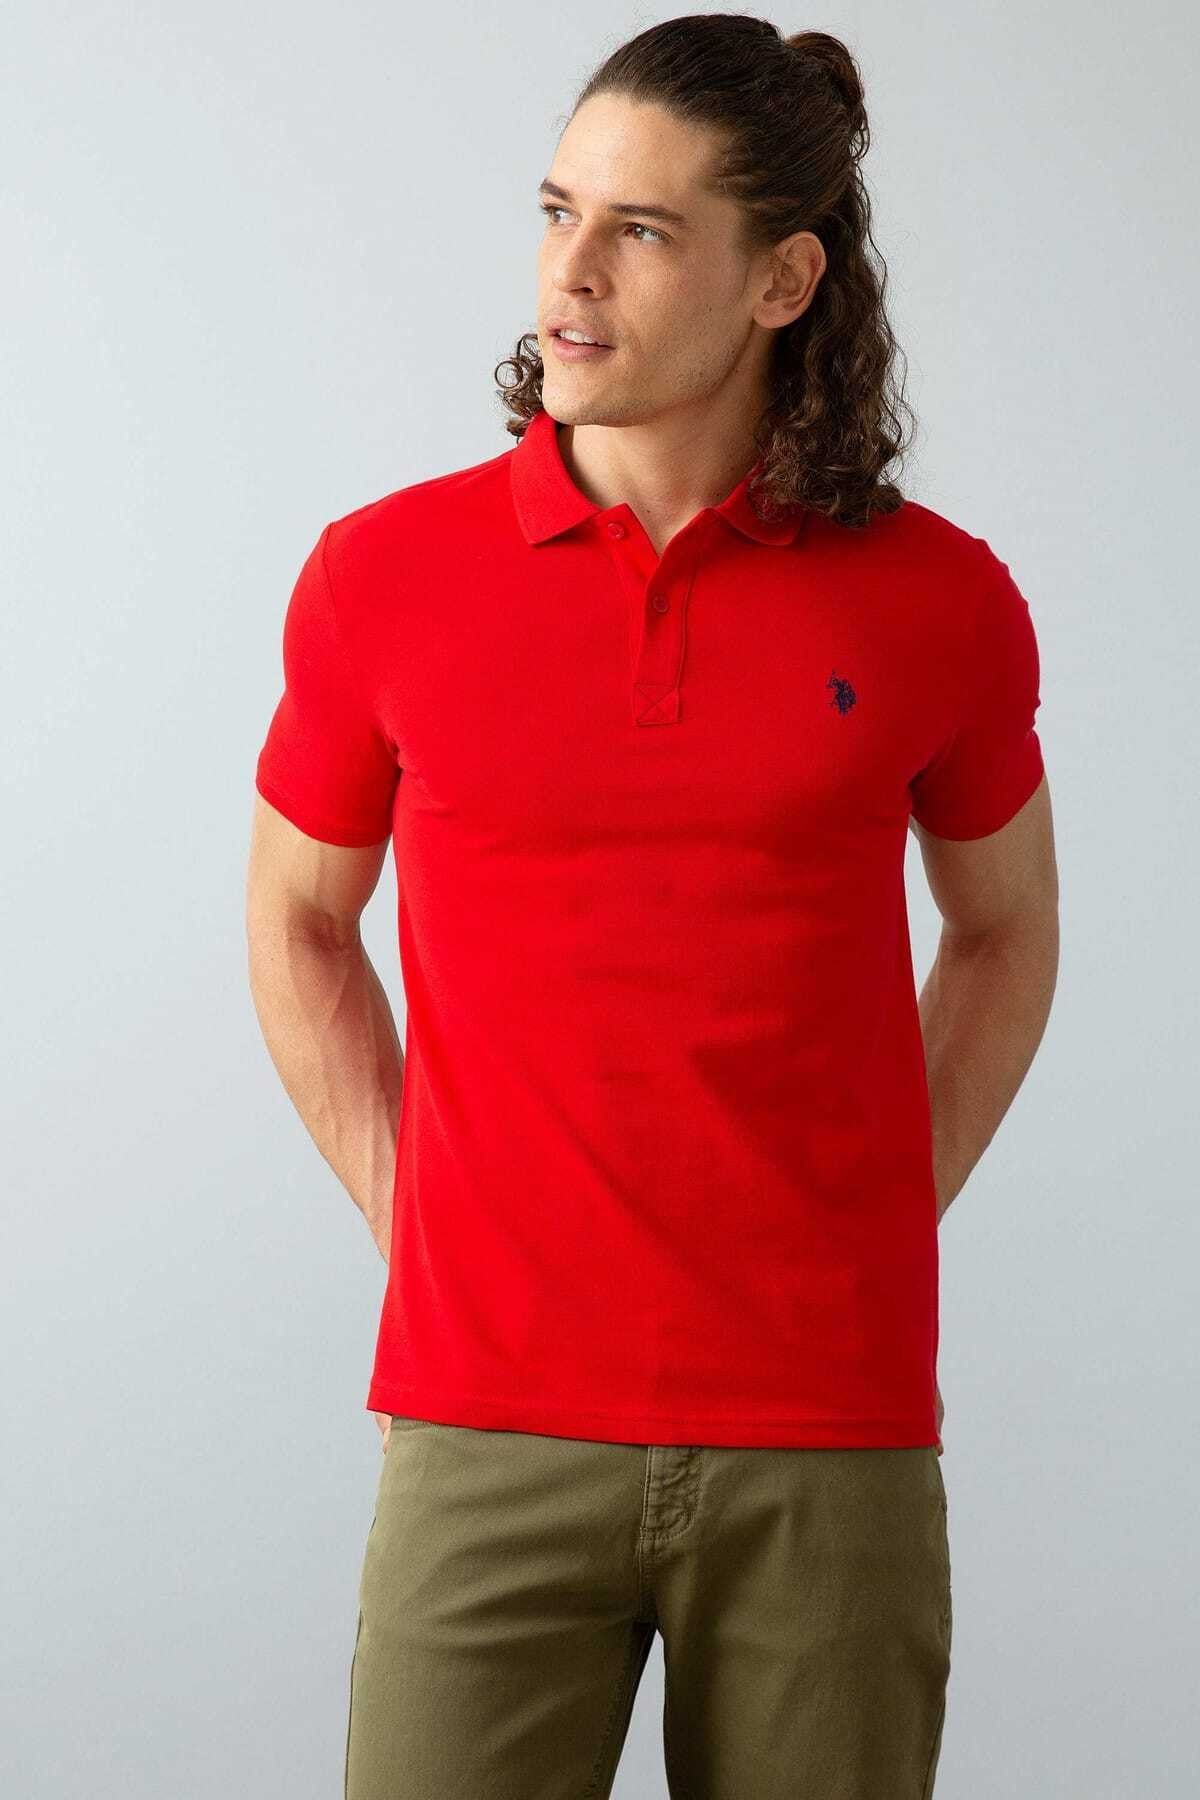 U.S. Polo Assn. Erkek Kırmızı Polo Yaka T-shirt G081gl011.000.739379